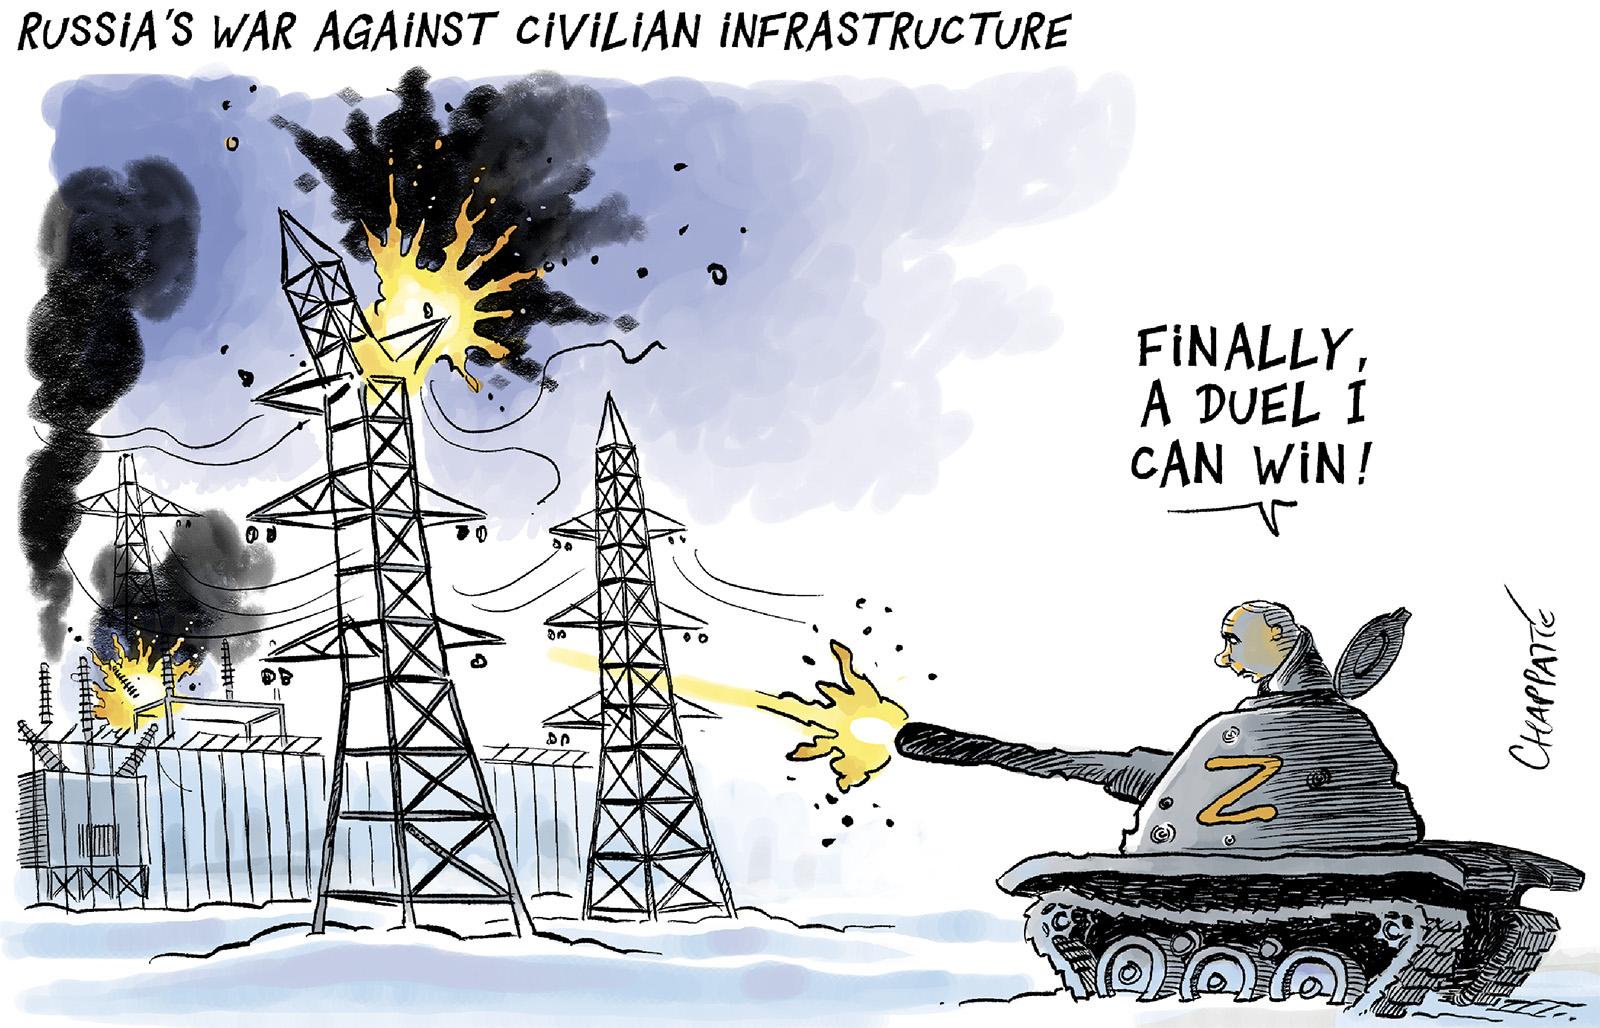 Russia's war against civilian infrastructures